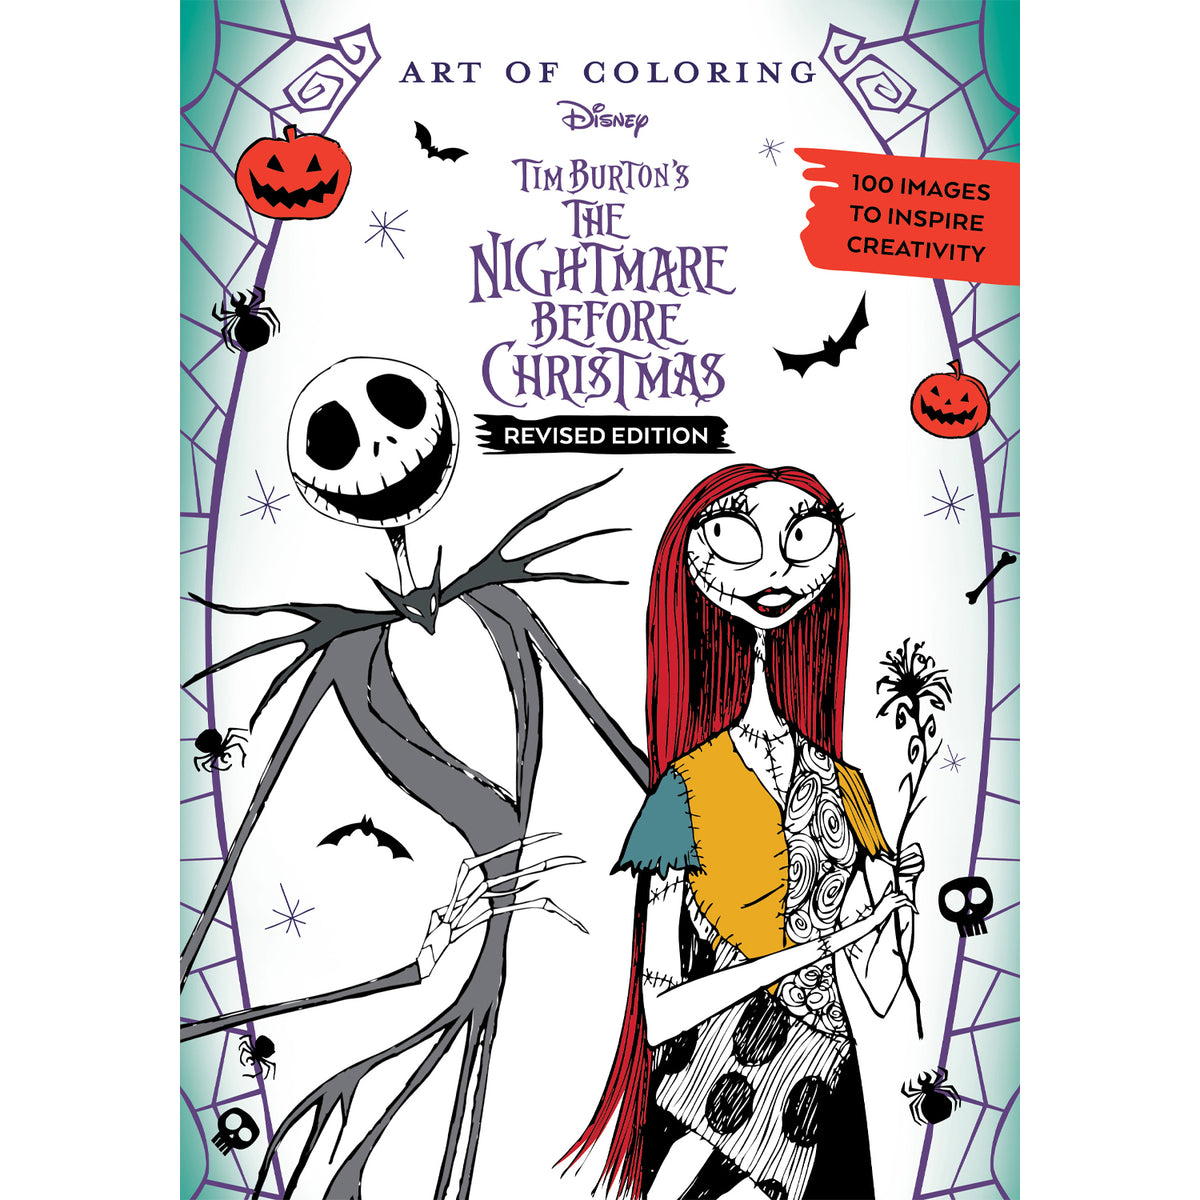 Art of Coloring Art of Coloring: Disney Tim Burton's The Nightmare Before Christmas Coloring Book